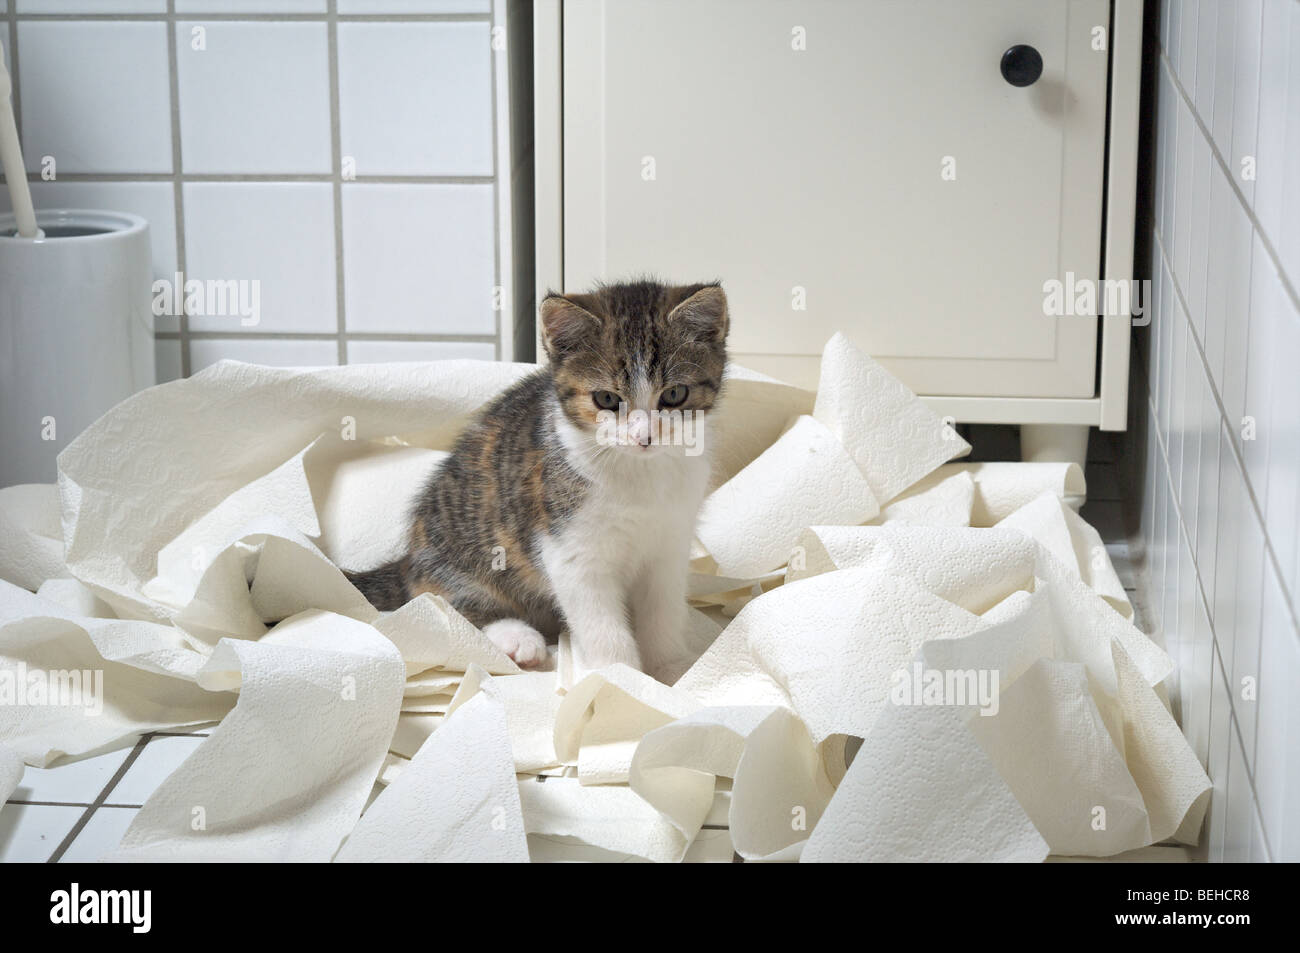 Kitten is sitting in lots of toilet paper Stock Photo